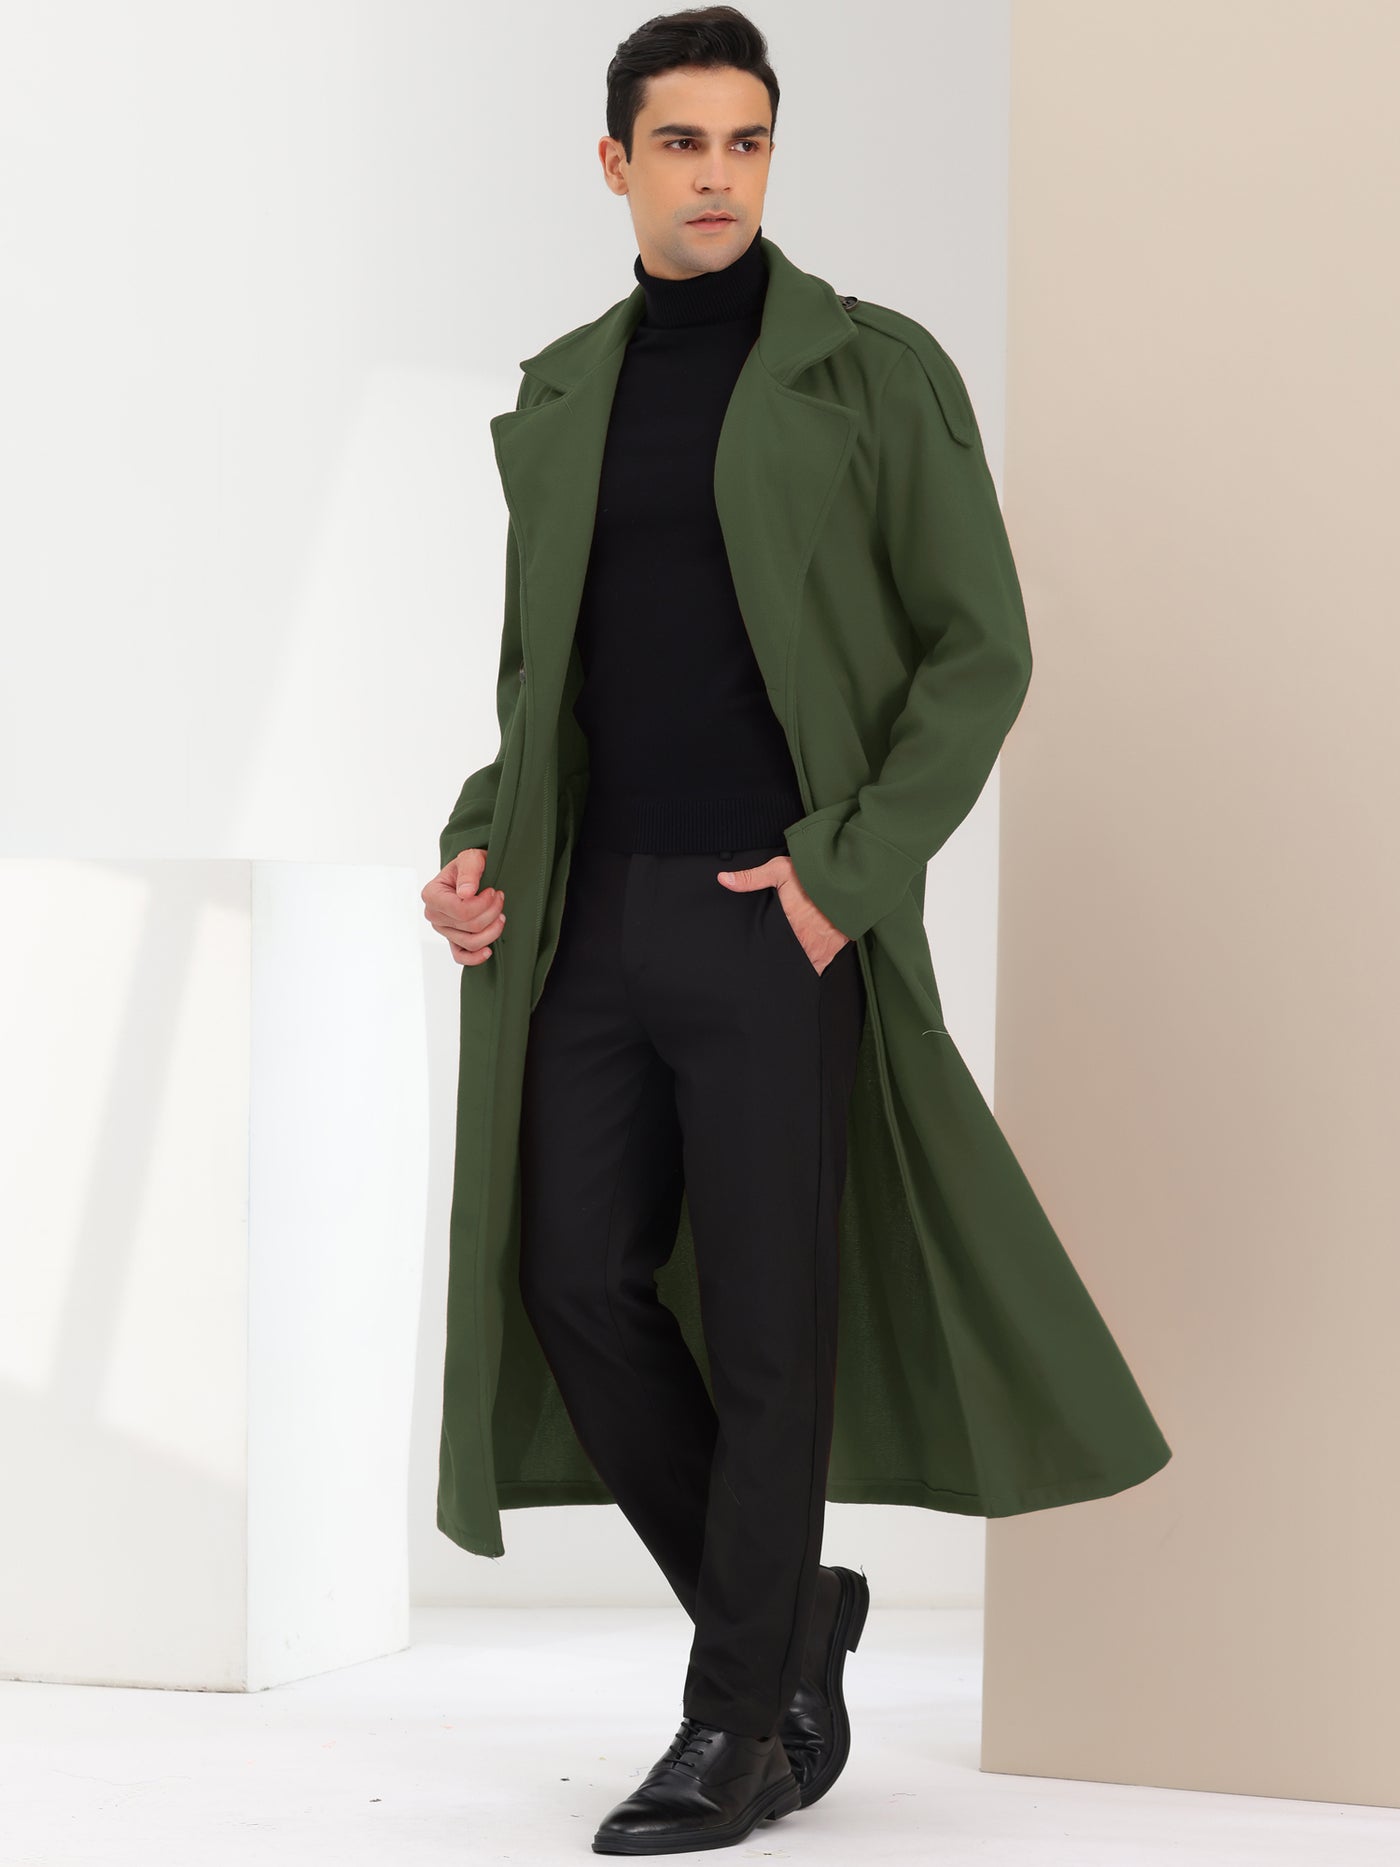 Bublédon Men's Winter Pea Coat Notch Lapel Double Breasted Solid Color Overcoat